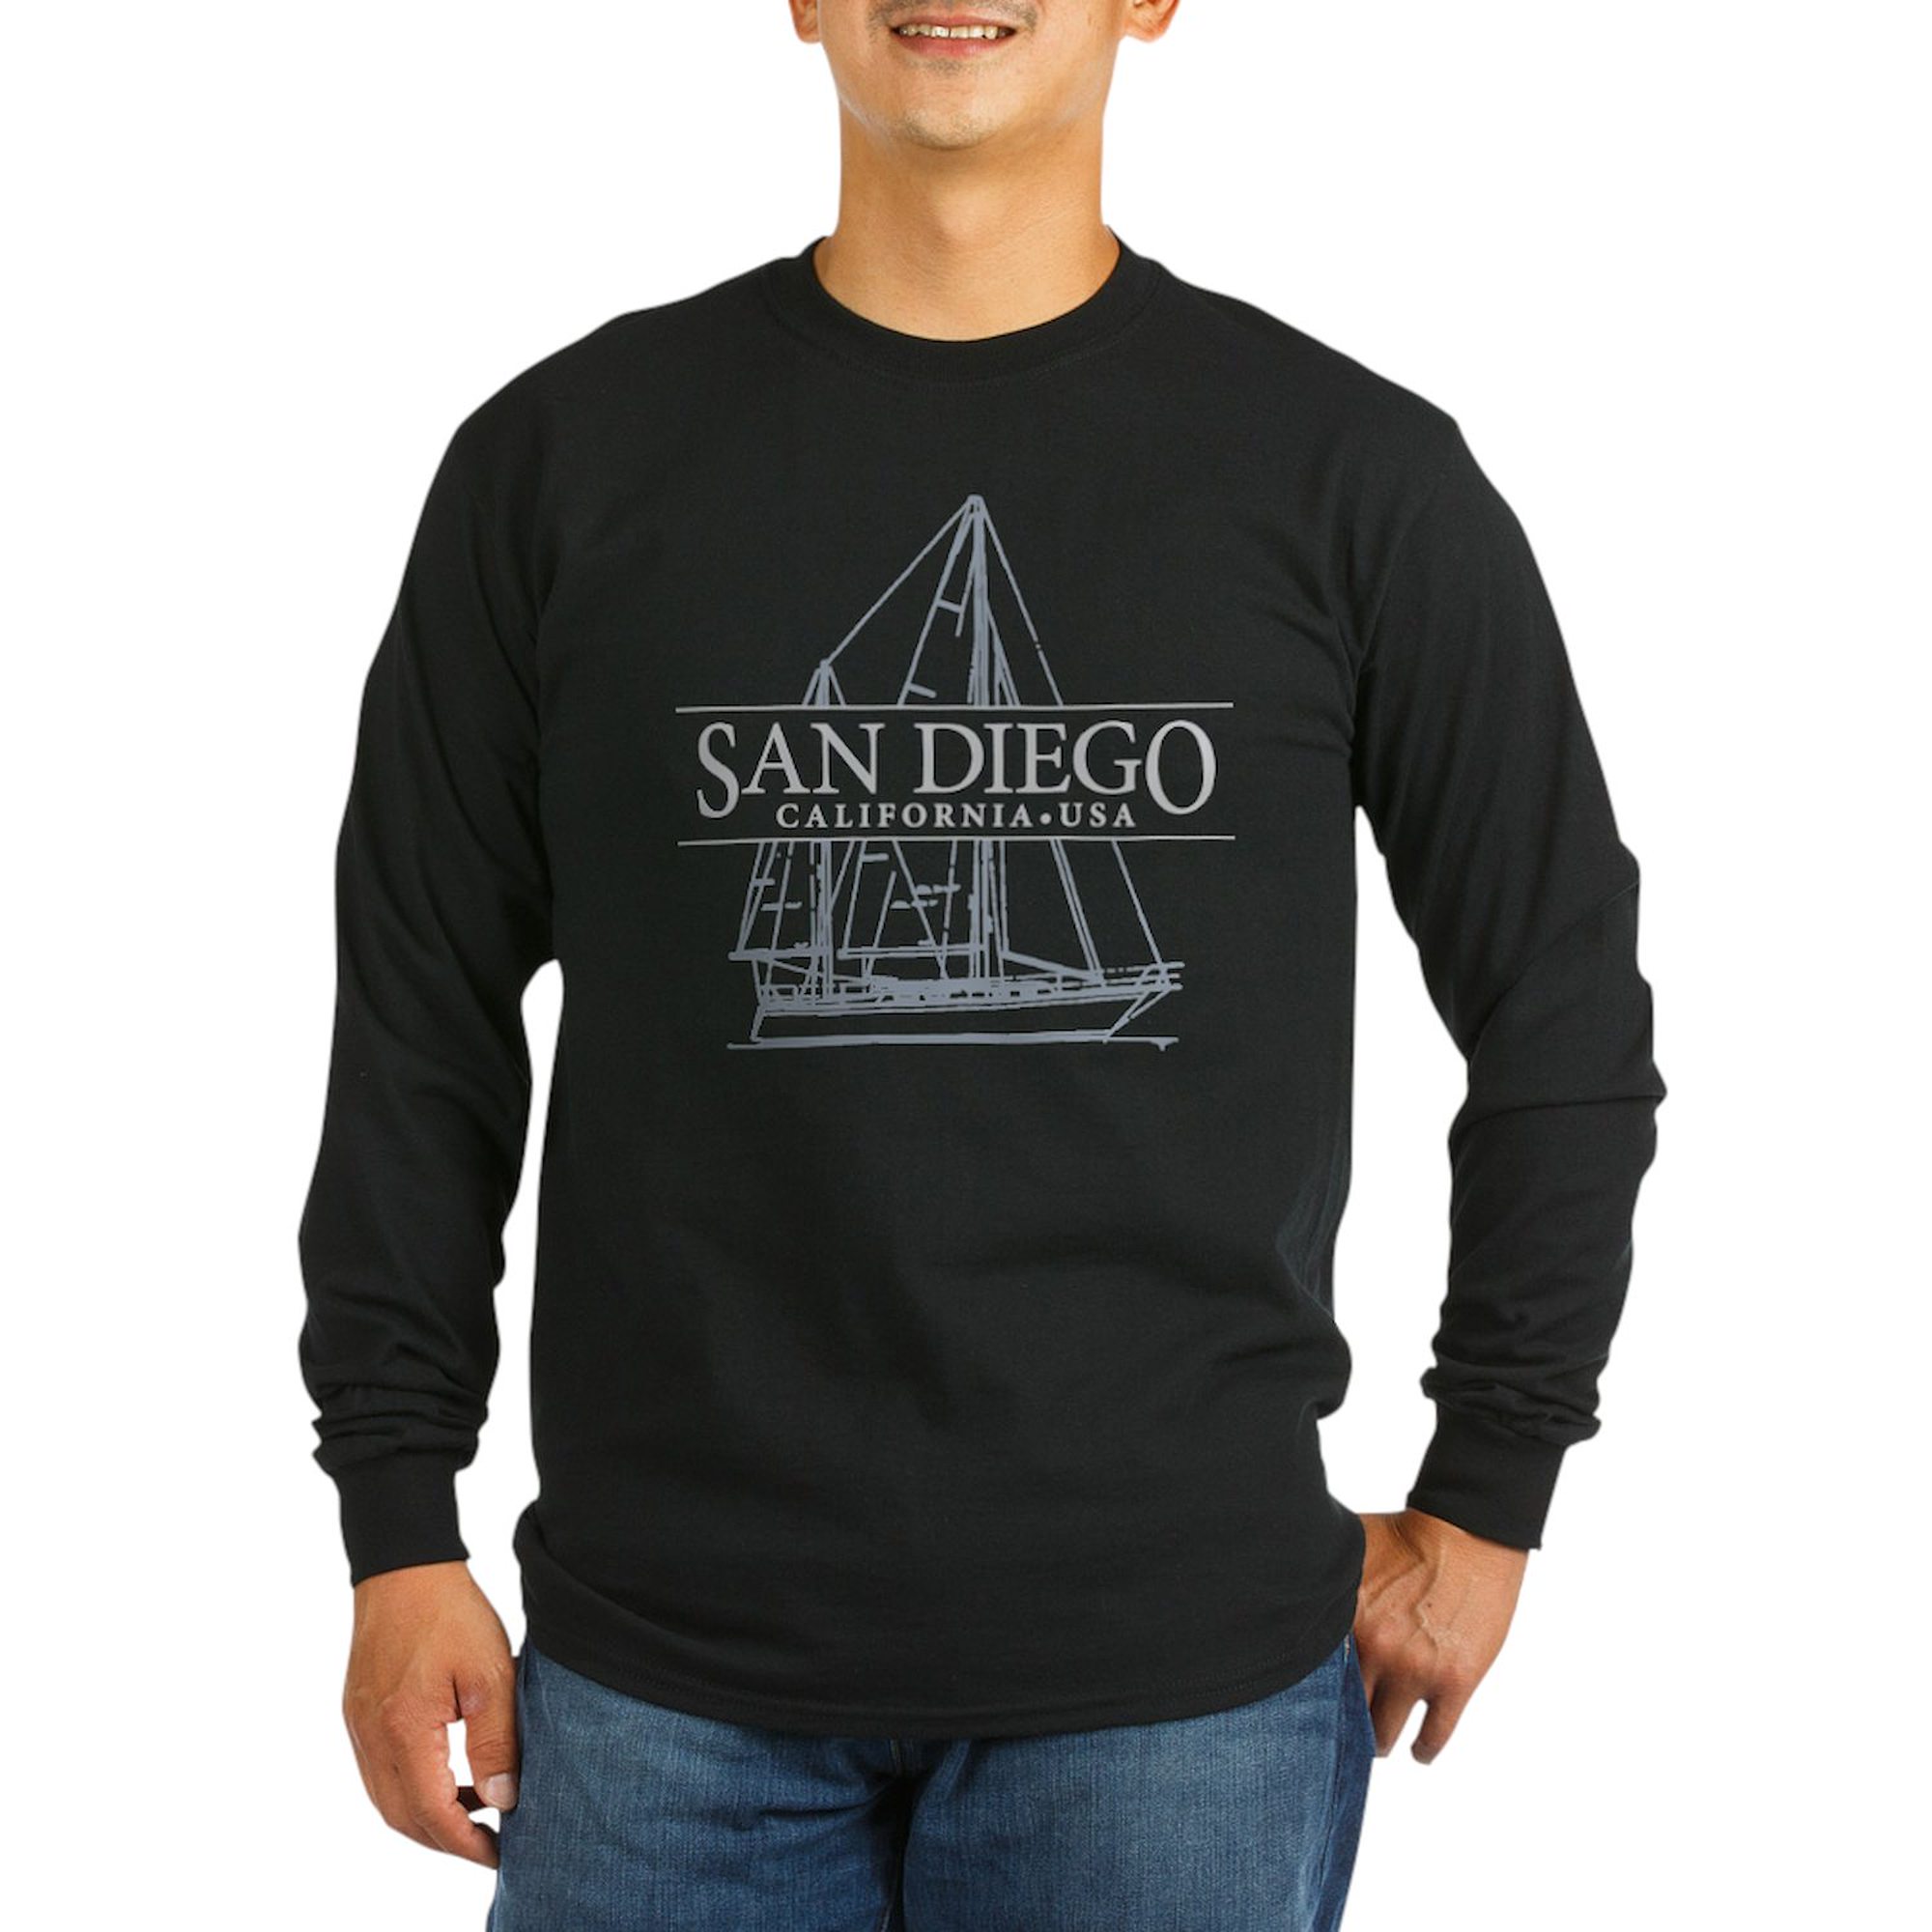 CafePress - San Diego Long Sleeve Dark T Shirt - Long Sleeve Dark T-Shirt - image 1 of 4